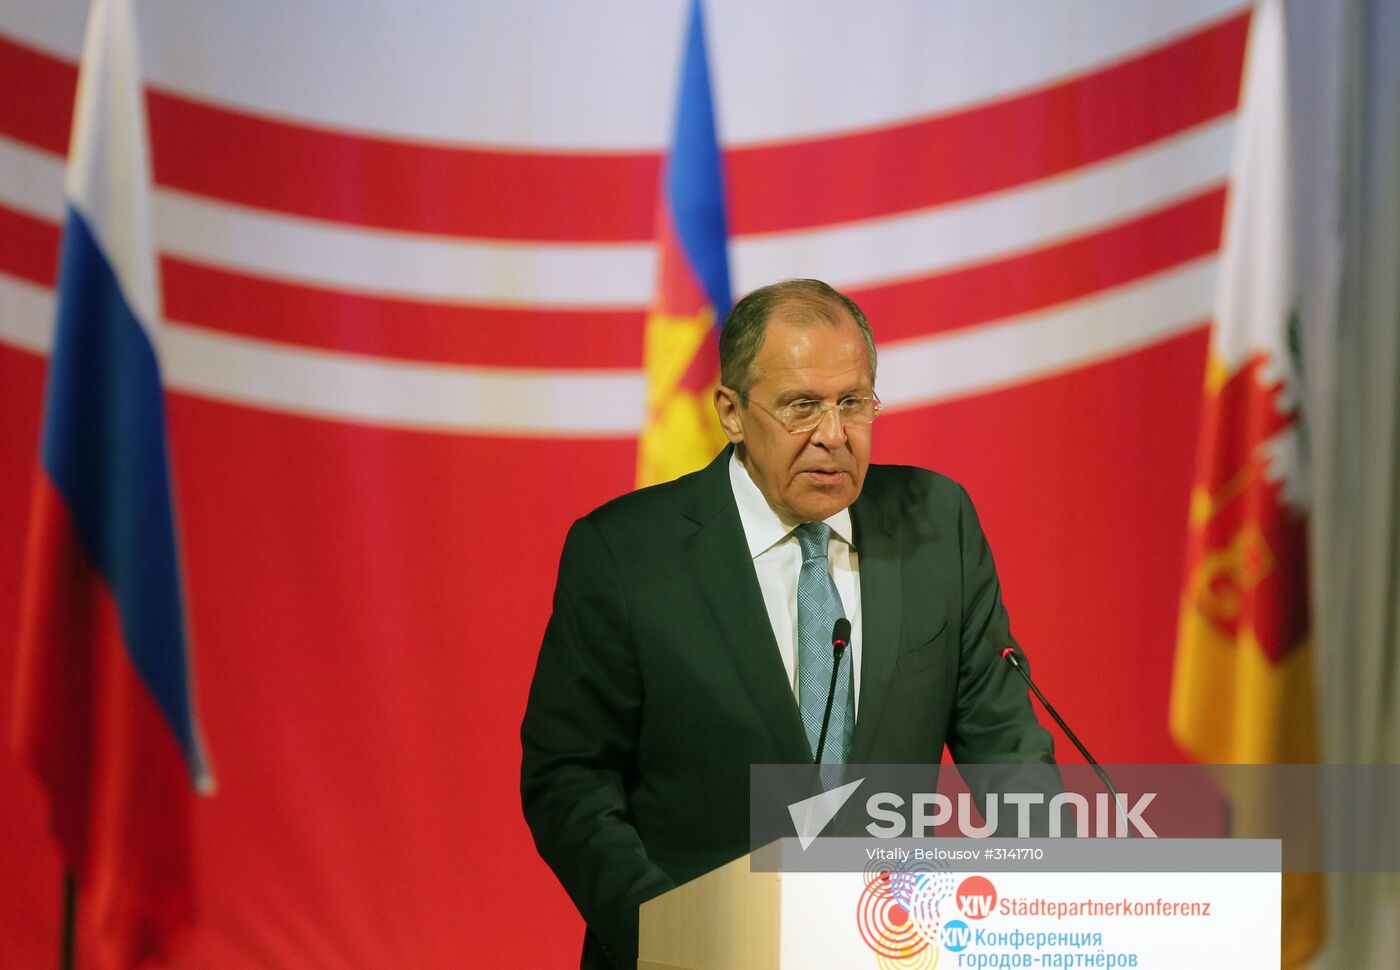 Russian Foreign Minister Sergei Lavrov visits Krasnodar